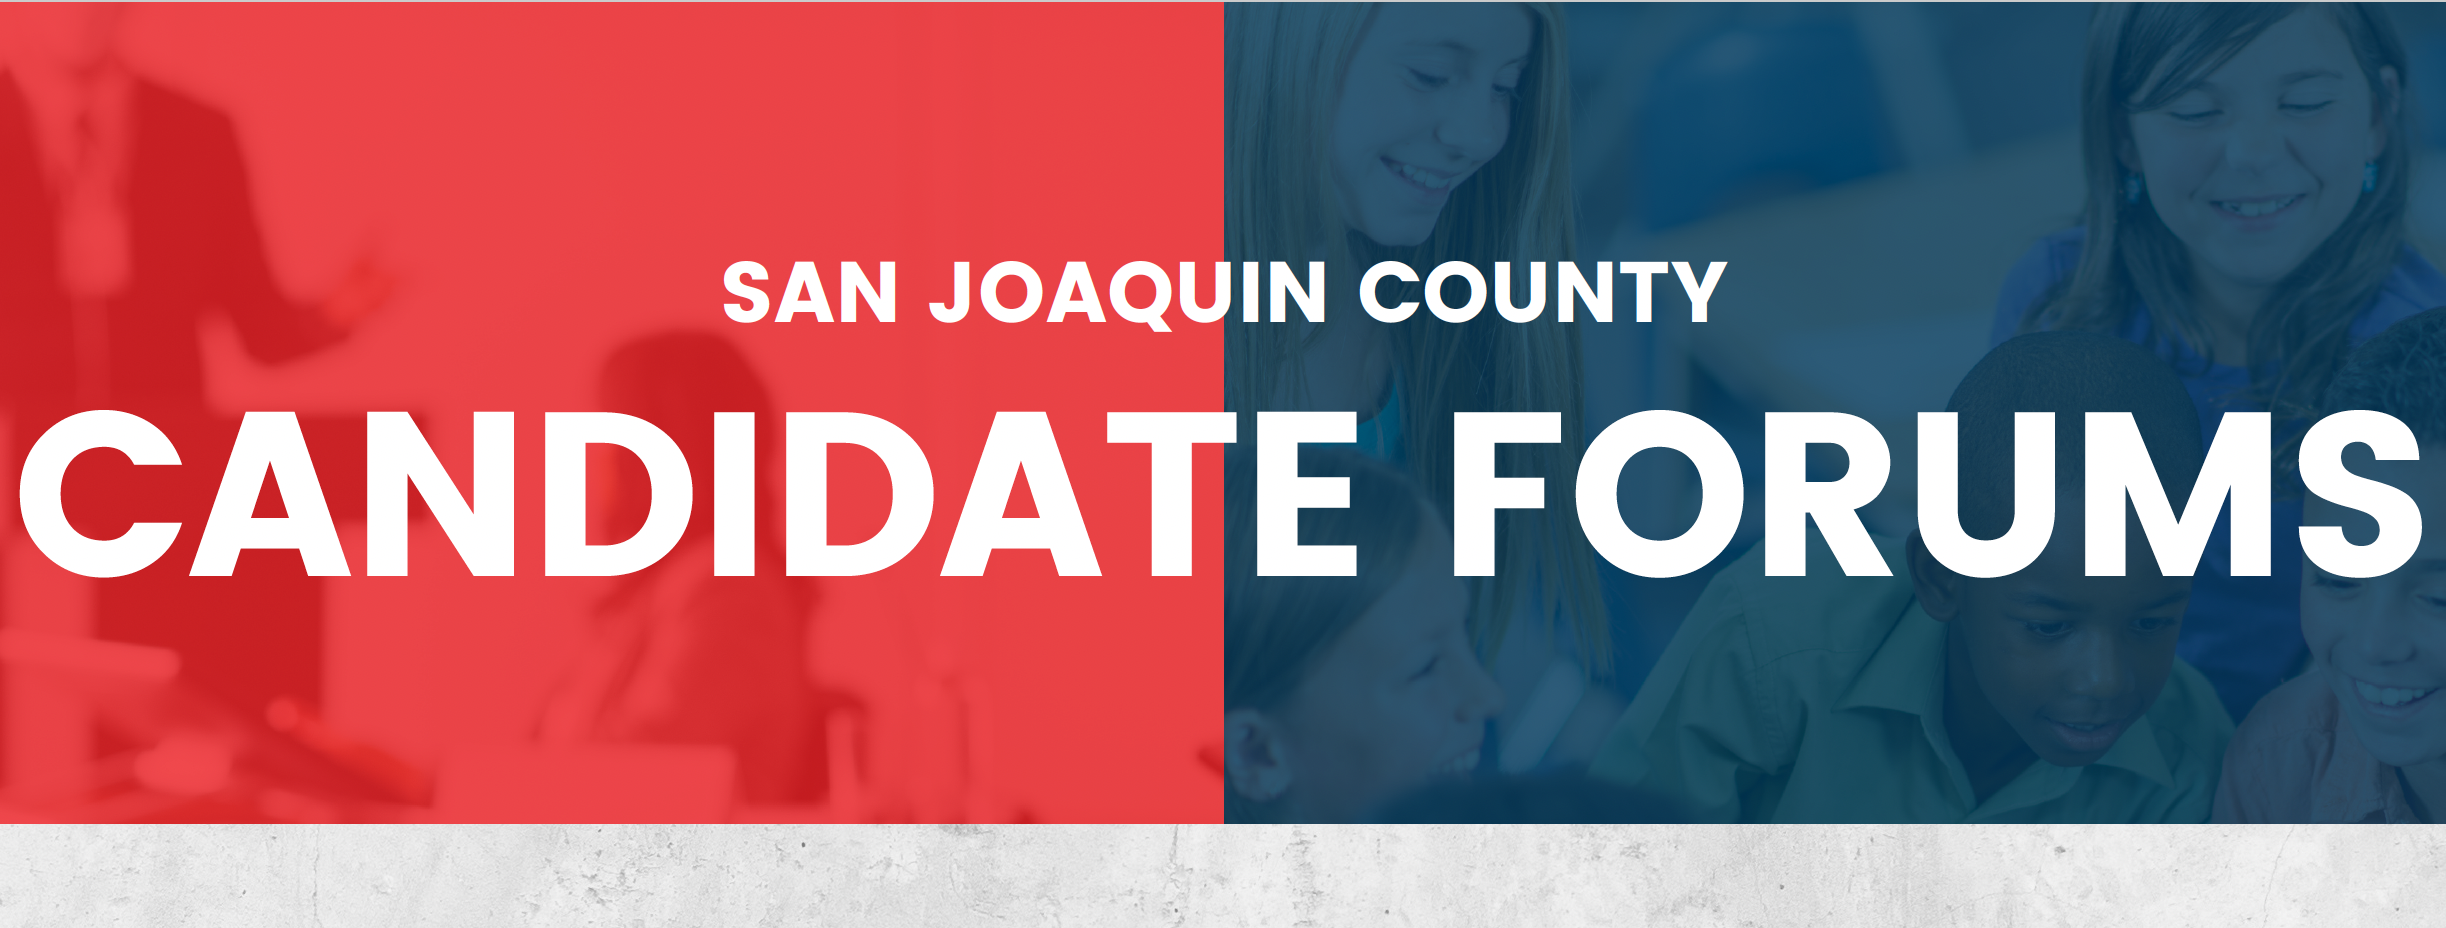 San Joaquin Candidate Forum